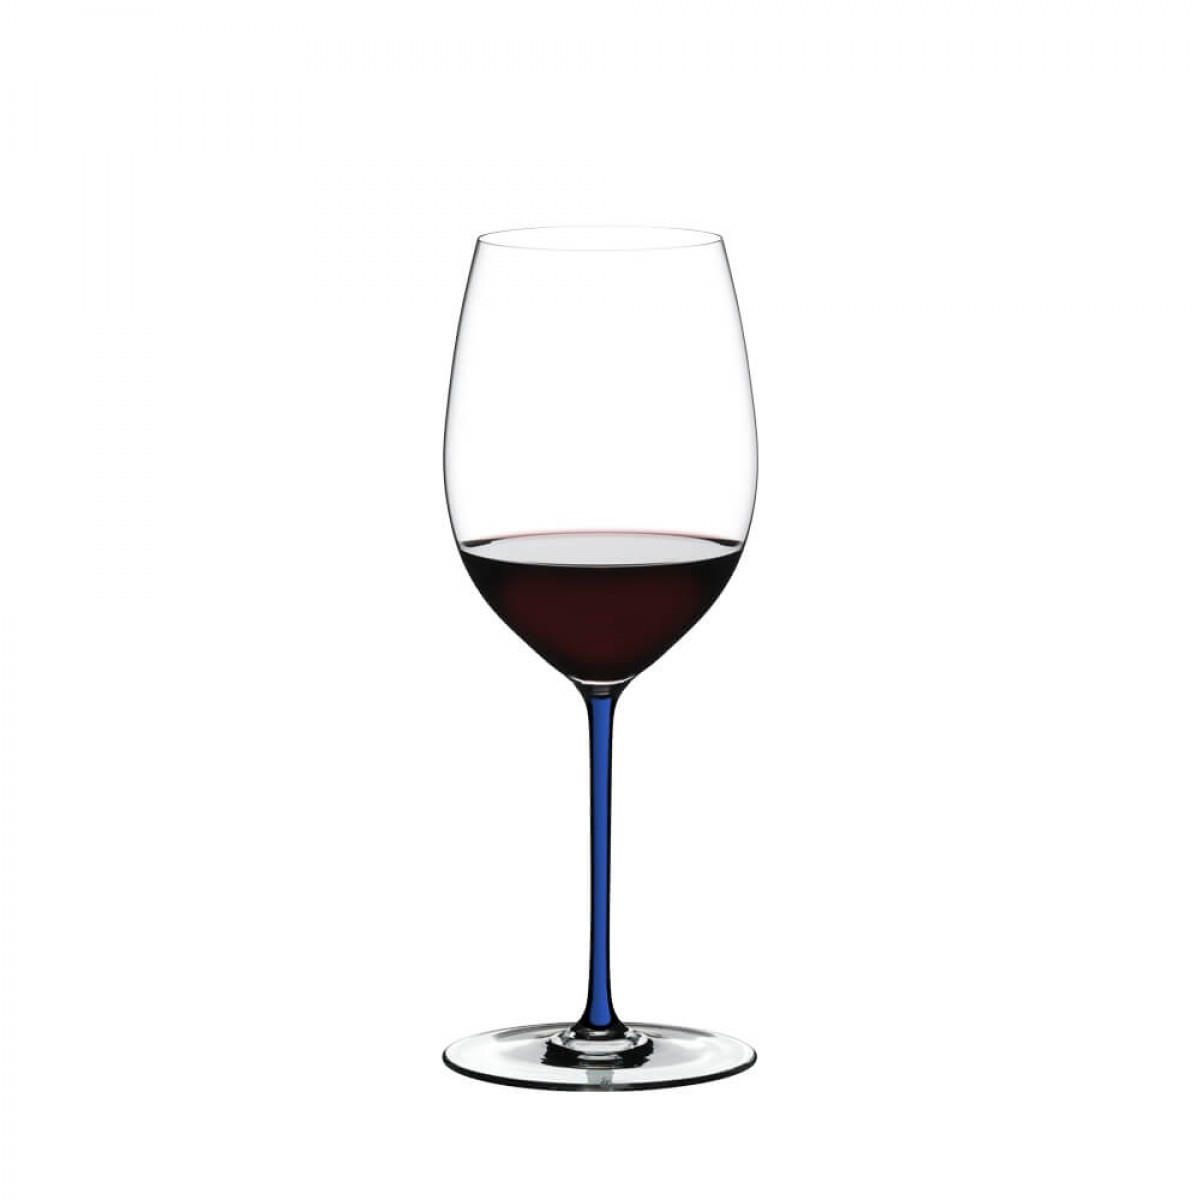 16 Wonderful White Glass Vase 2024 free download white glass vase of fatto a mano cabernet dark blue 4900 0d cellarmaster wines in fatto a mano cabernet dark blue 4900 0d